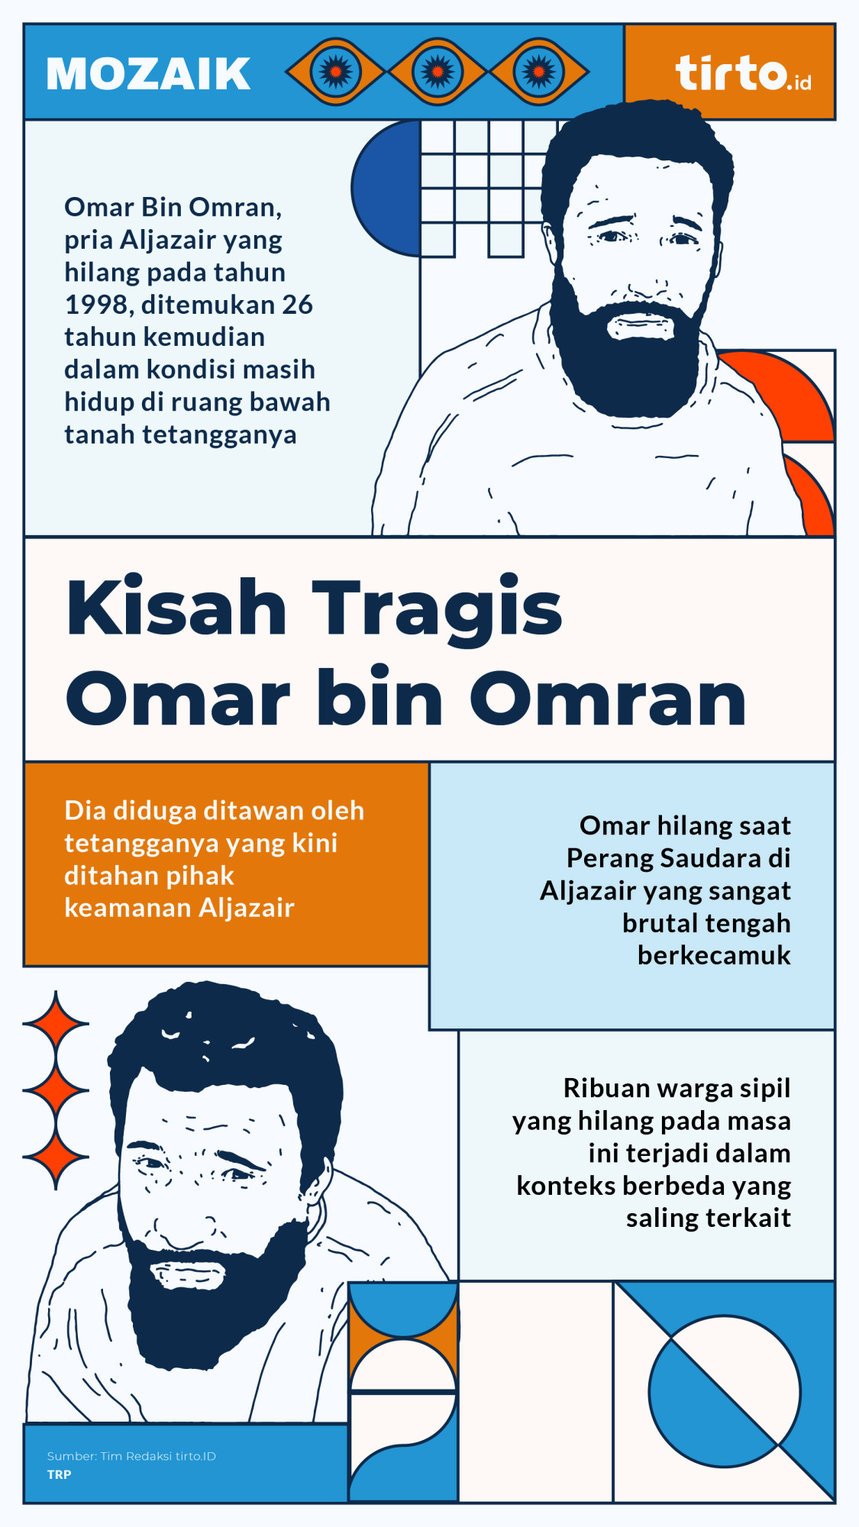 Infografik Mozaik Omar bin Omran